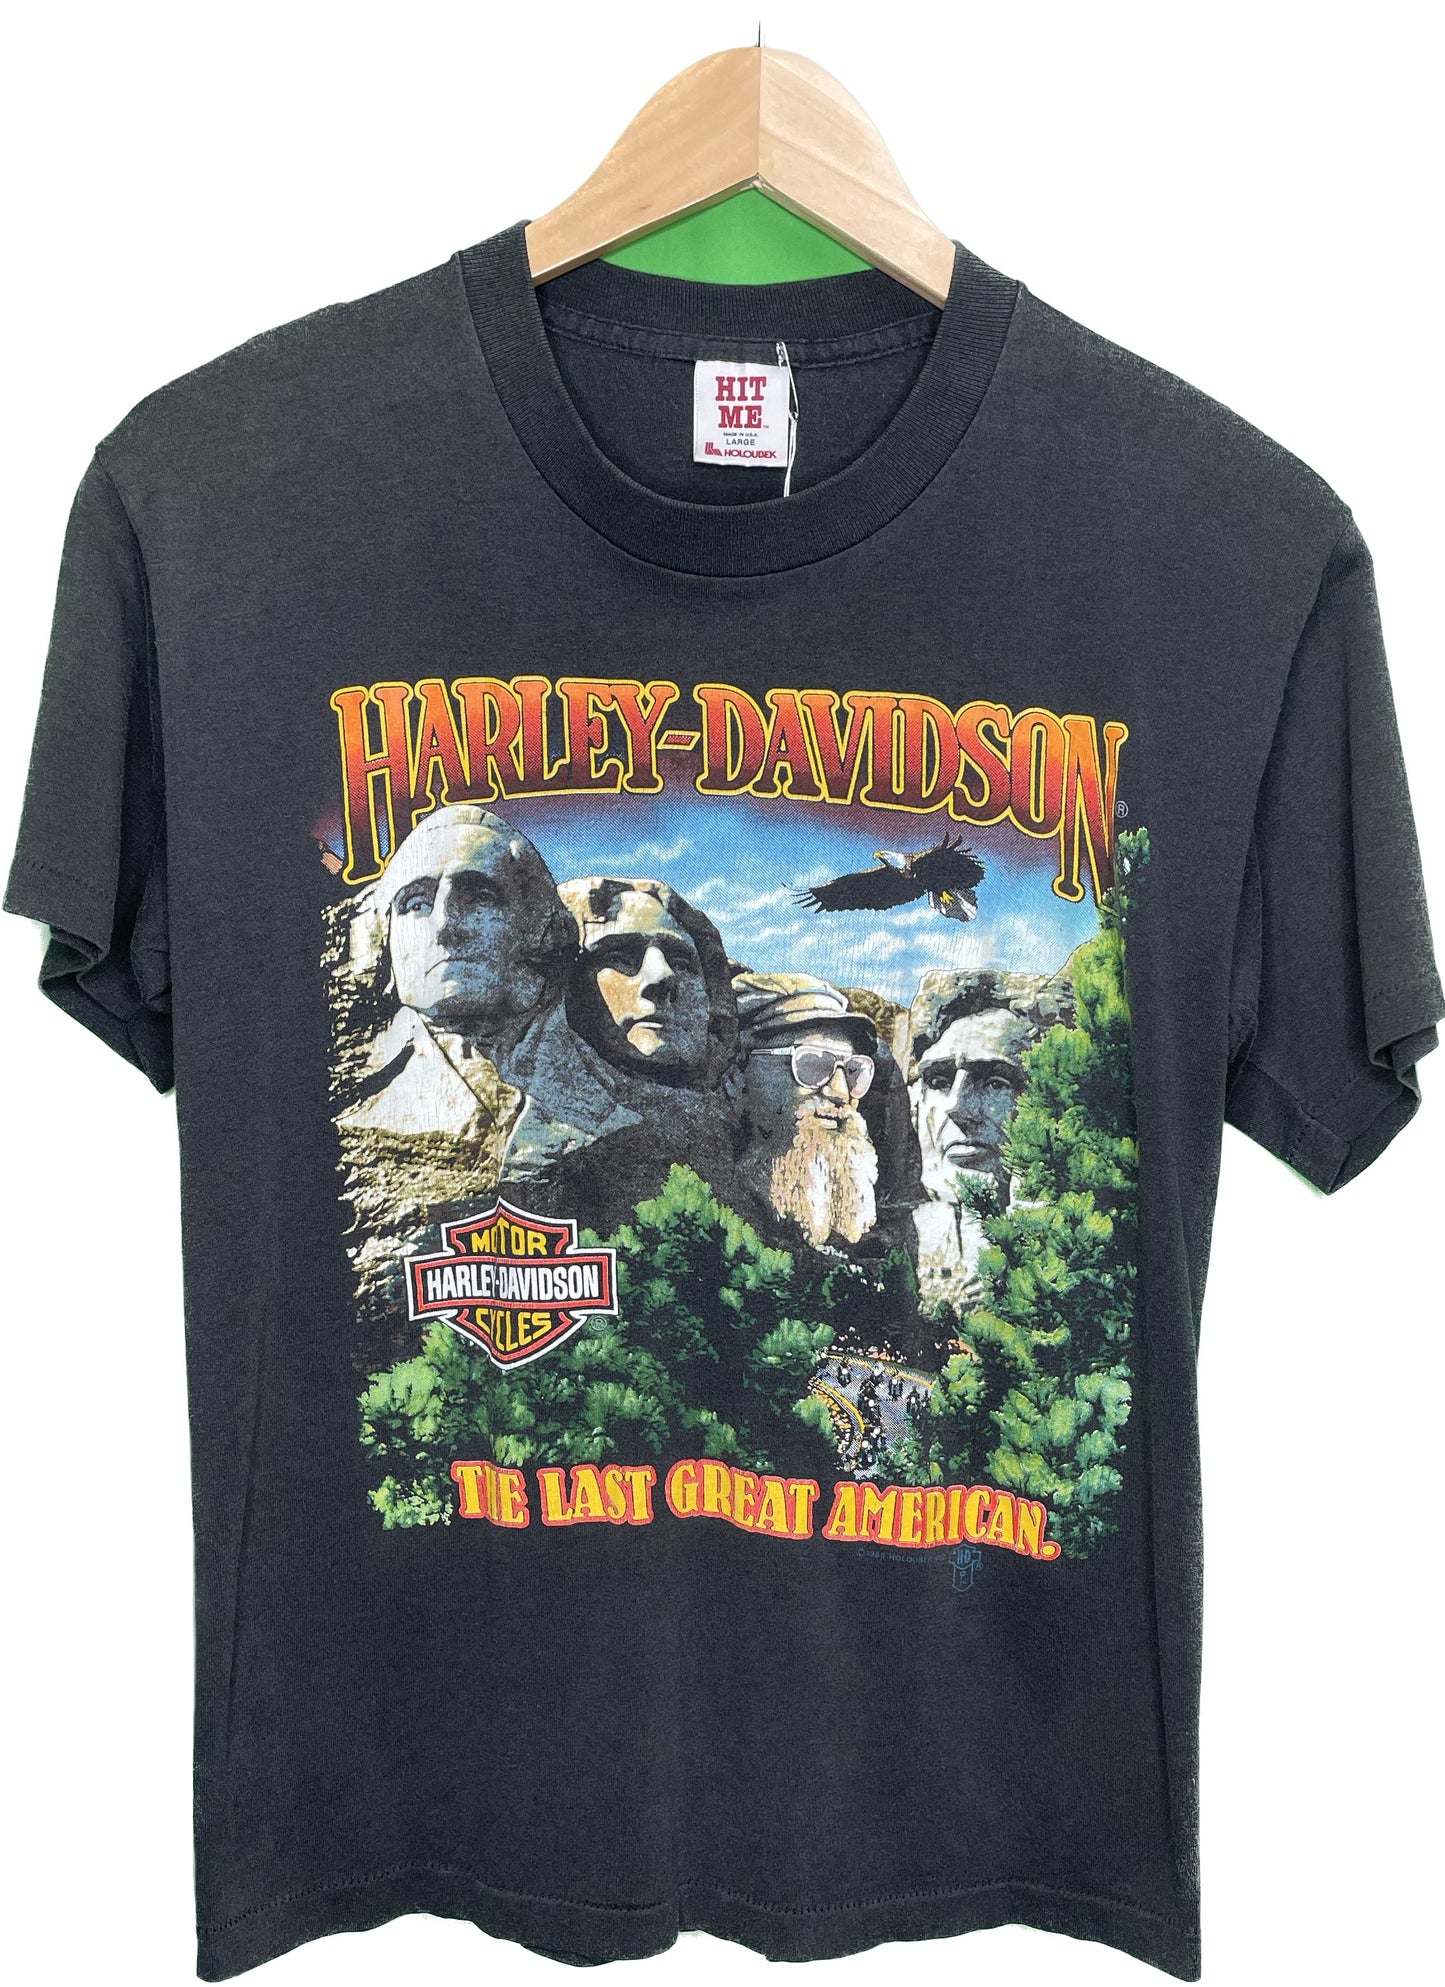 Vintage M 80s Harley Davidson Winnipeg Canada T-Shirt